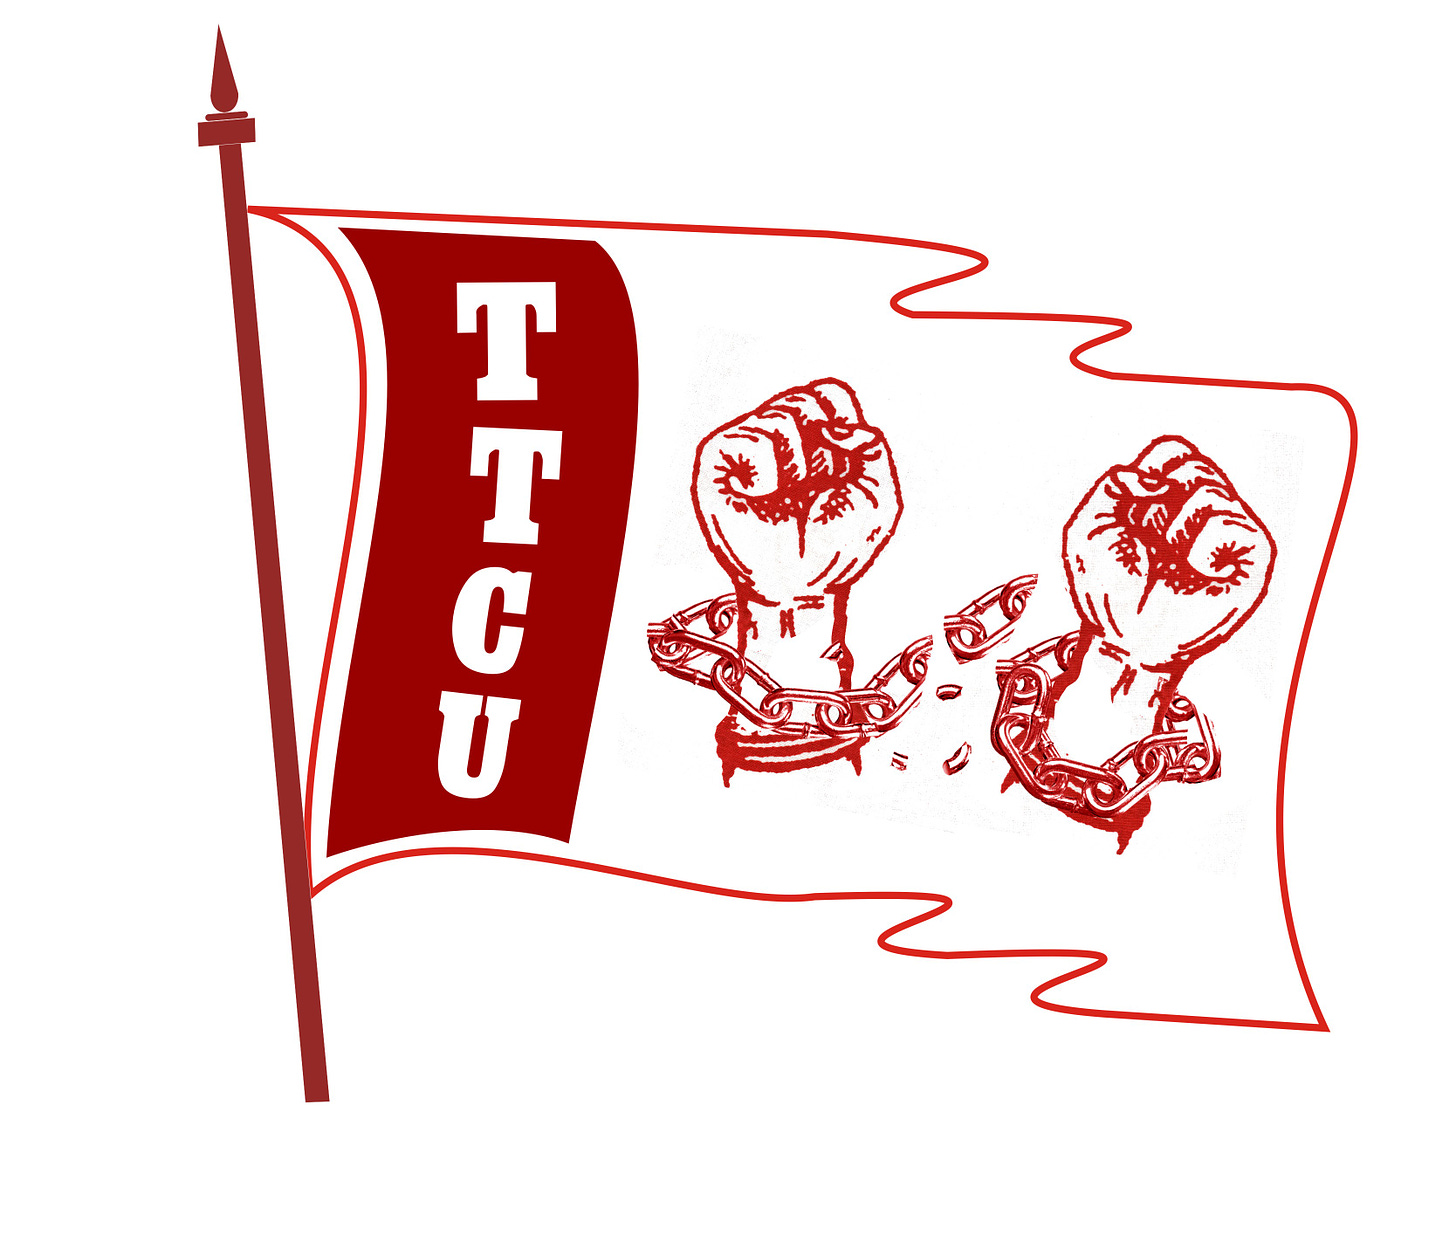 Flag of the TTCU